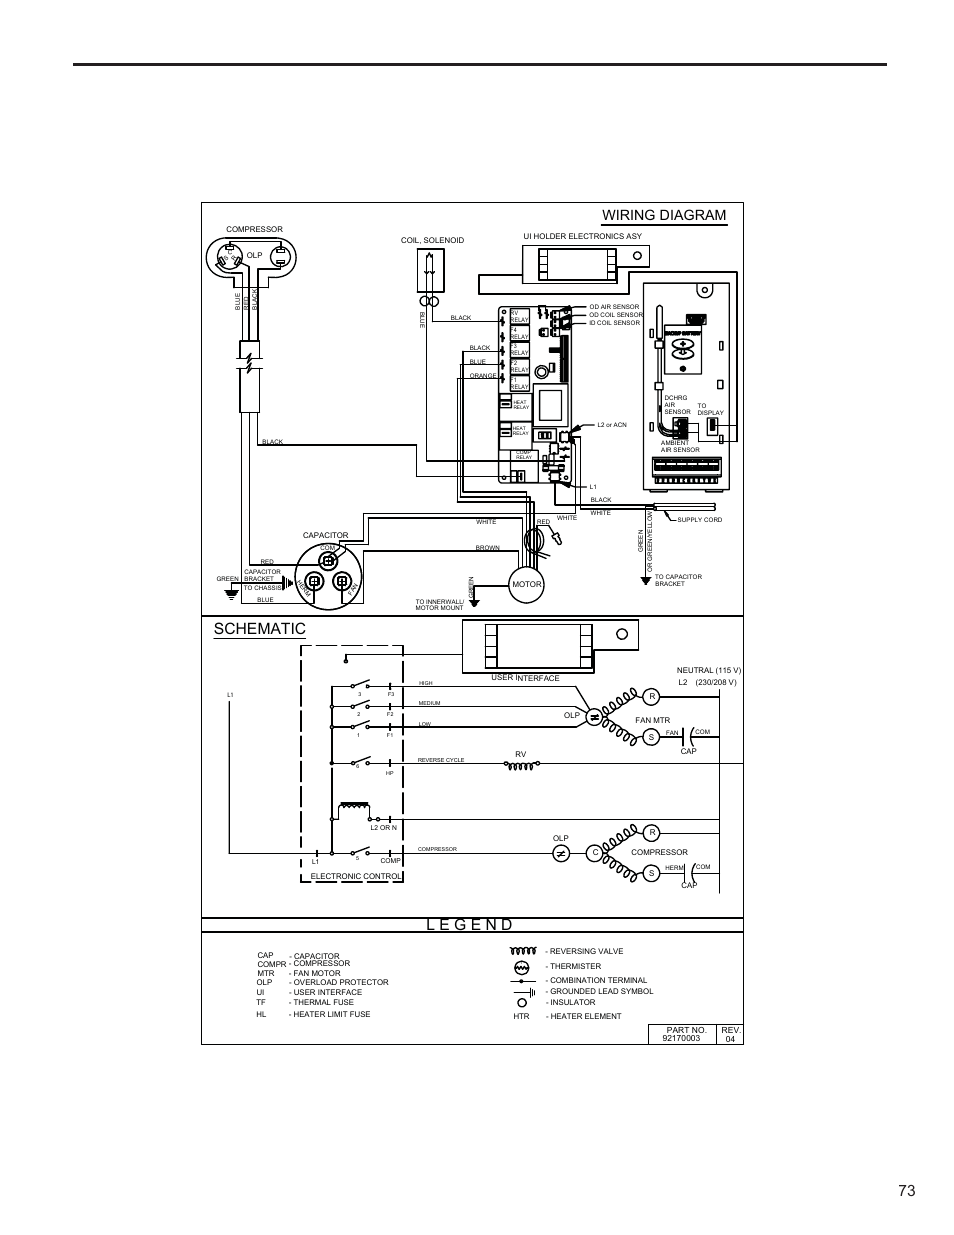 Wiring Diagram For Heat Pump from www.manualsdir.com